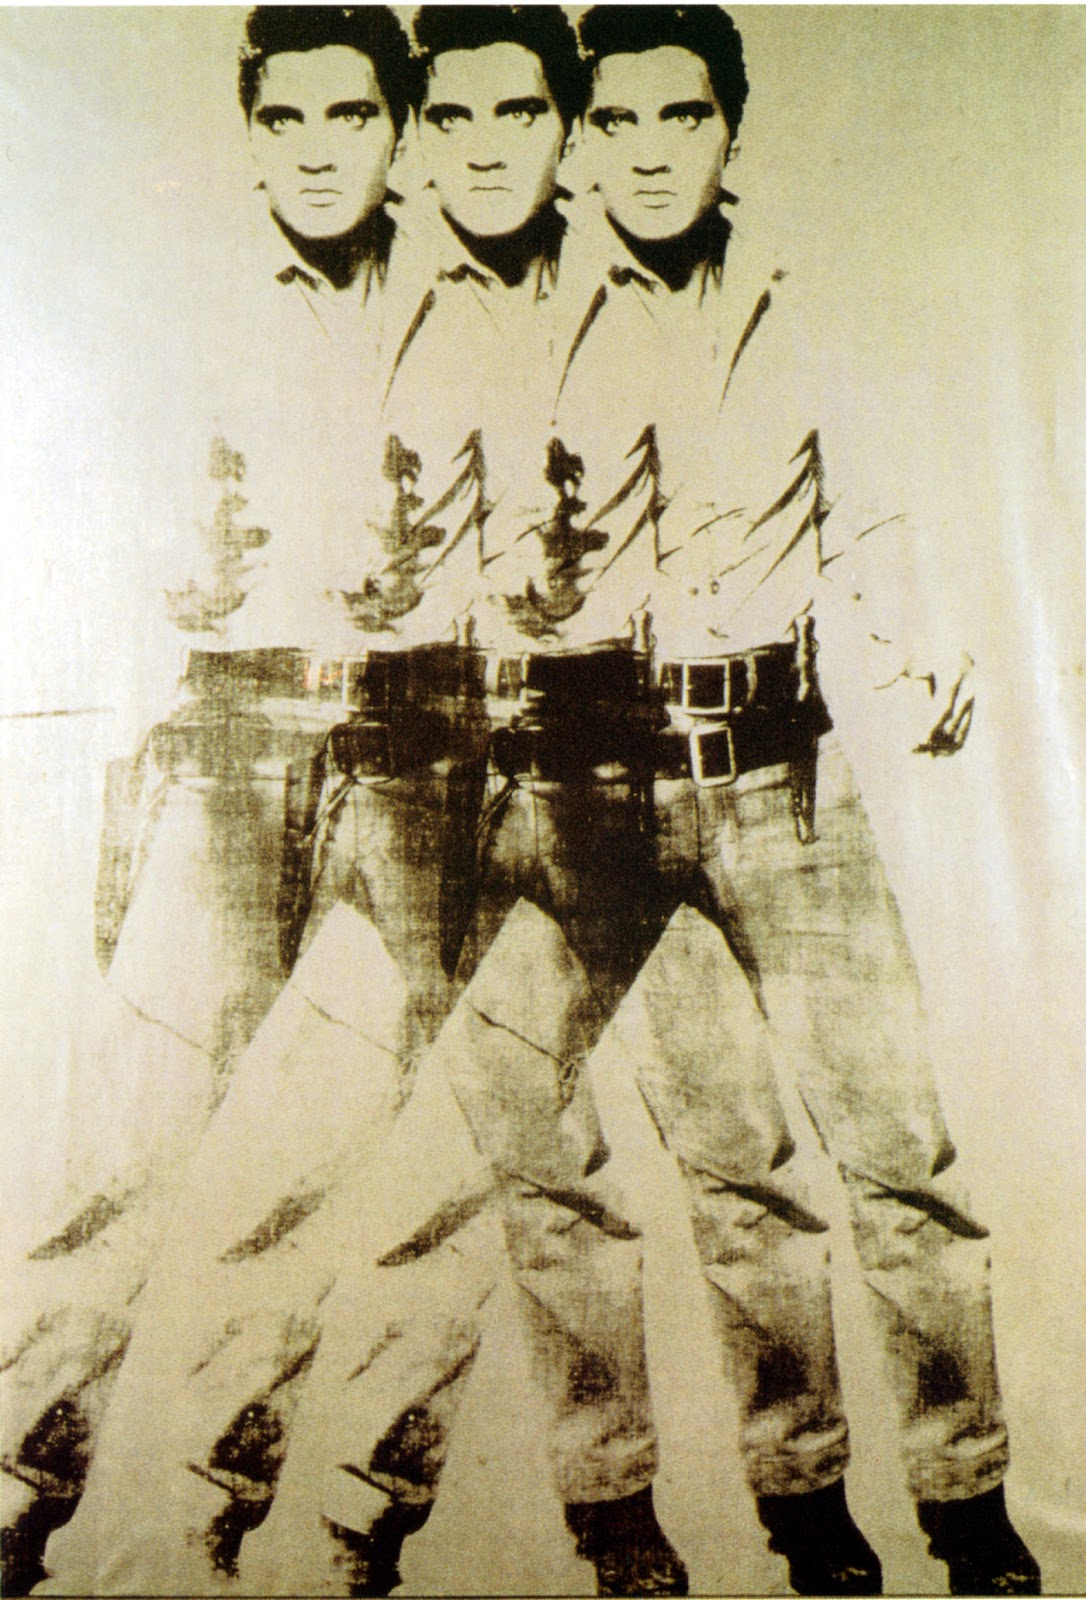 Andy+Warhol-1928-1987 (192).jpg